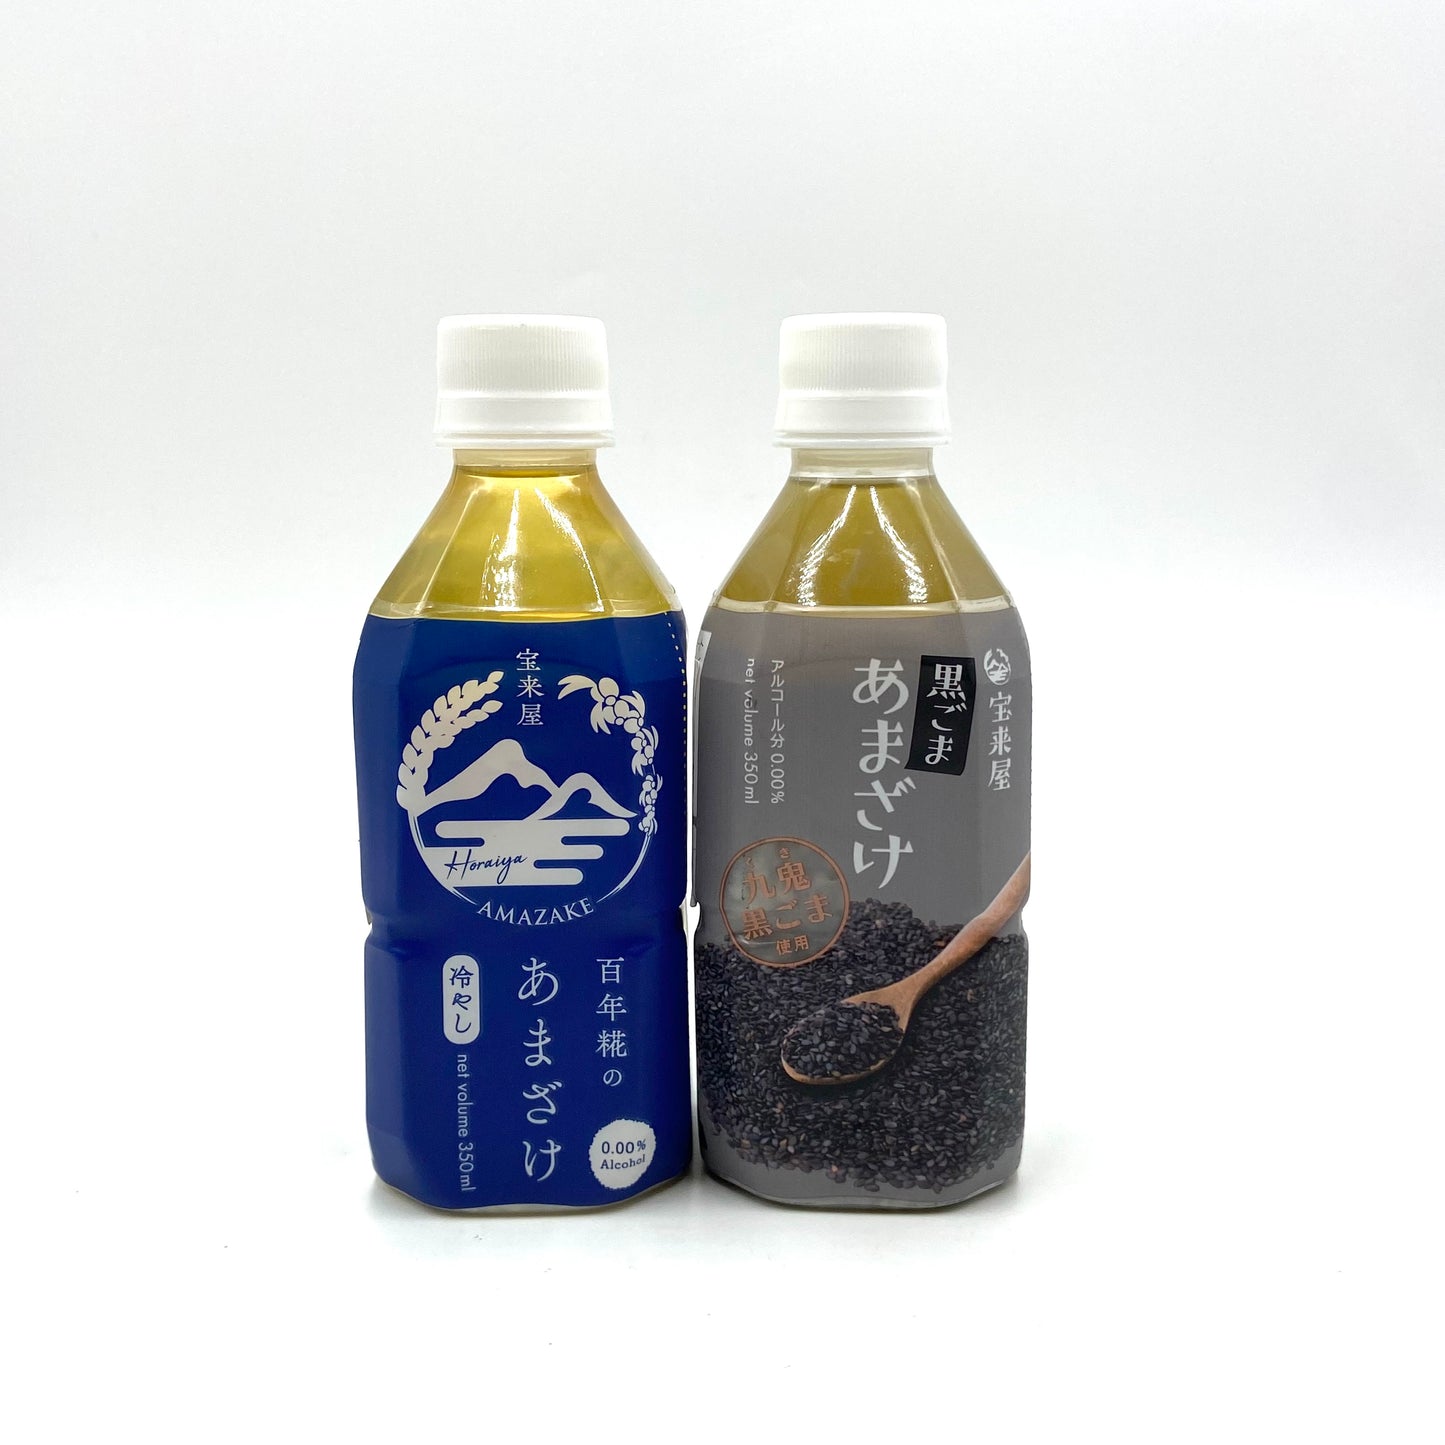 Horaiya Amazake Original 350ml 宝来屋　百年糀のあまざけ　(冷やし)　0.00% alcohol